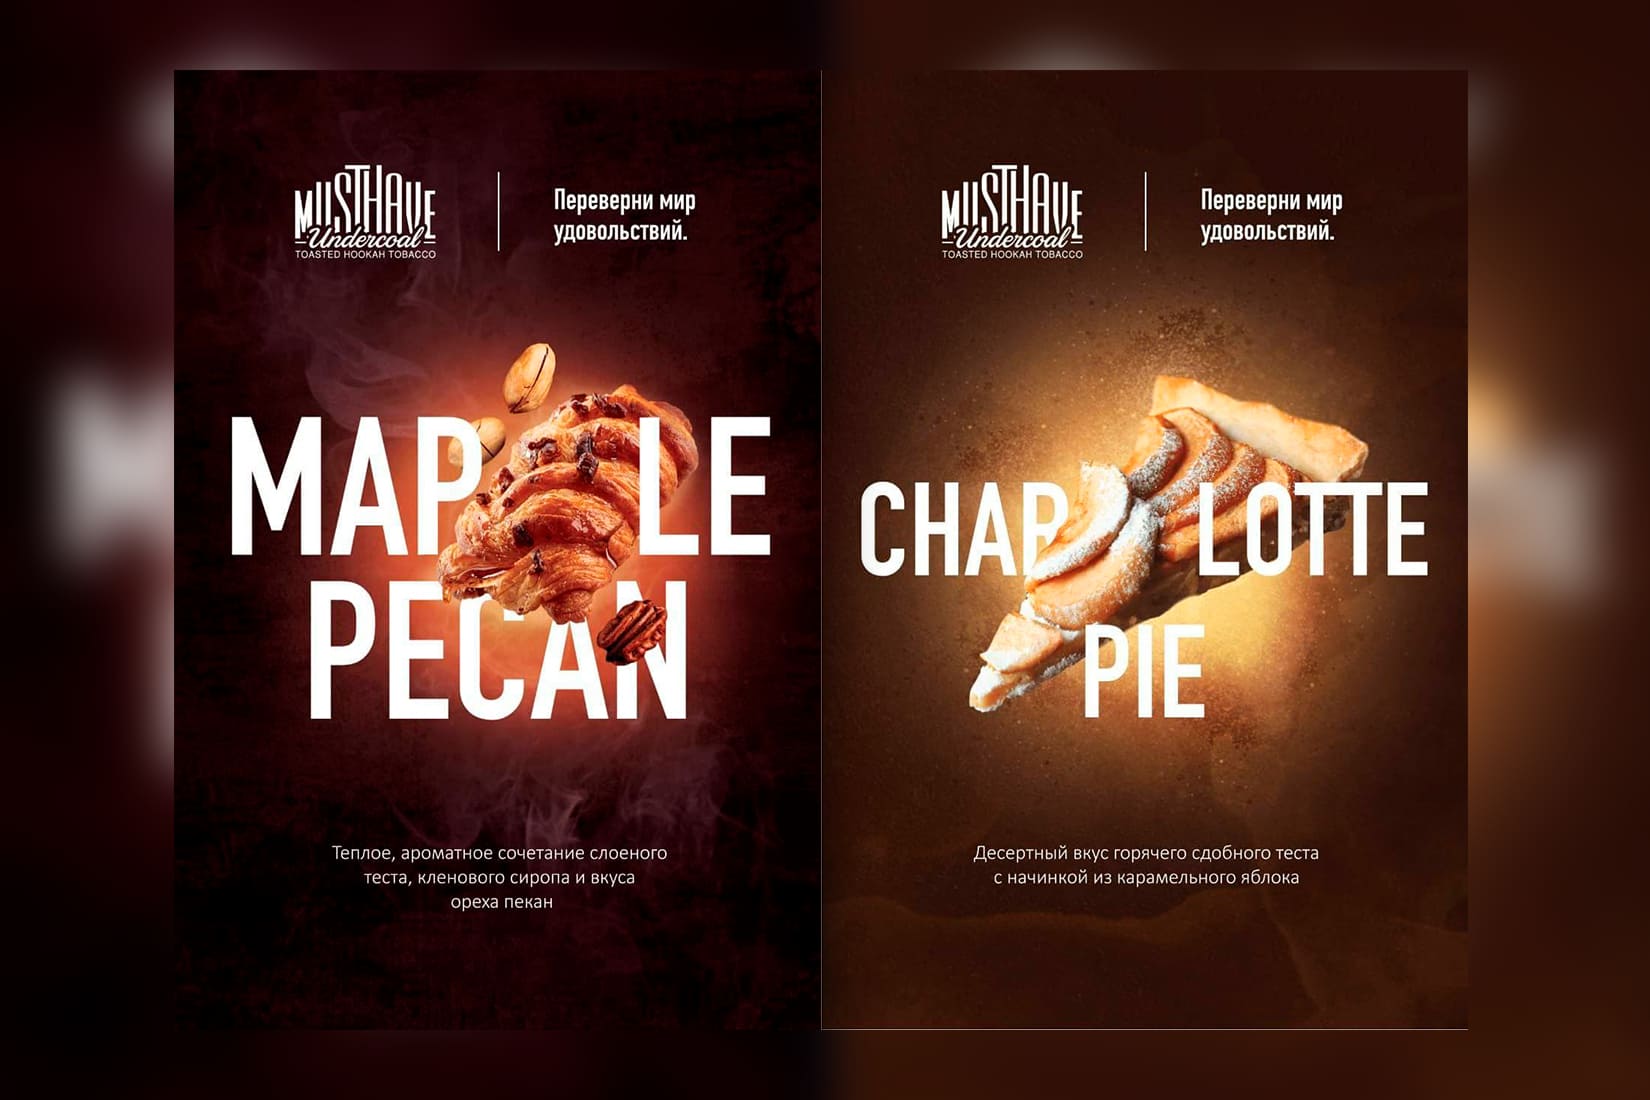 Новые вкусы от Must Have: Maple pecan и Charlotte pie